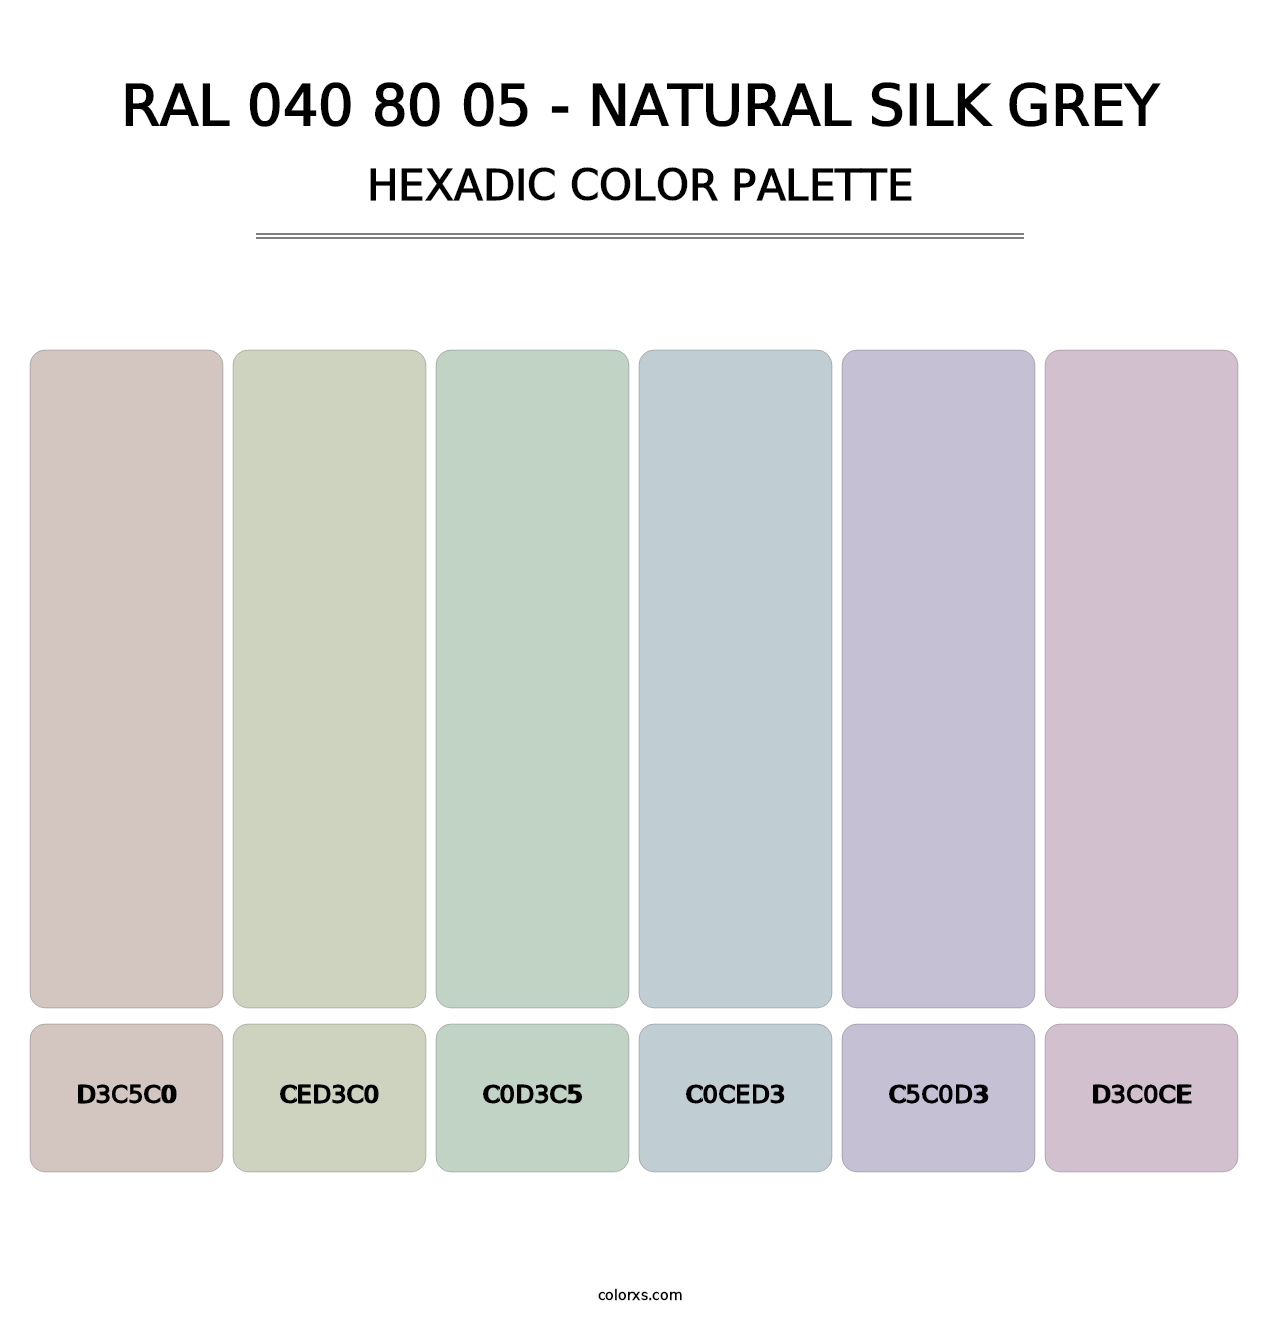 RAL 040 80 05 - Natural Silk Grey - Hexadic Color Palette